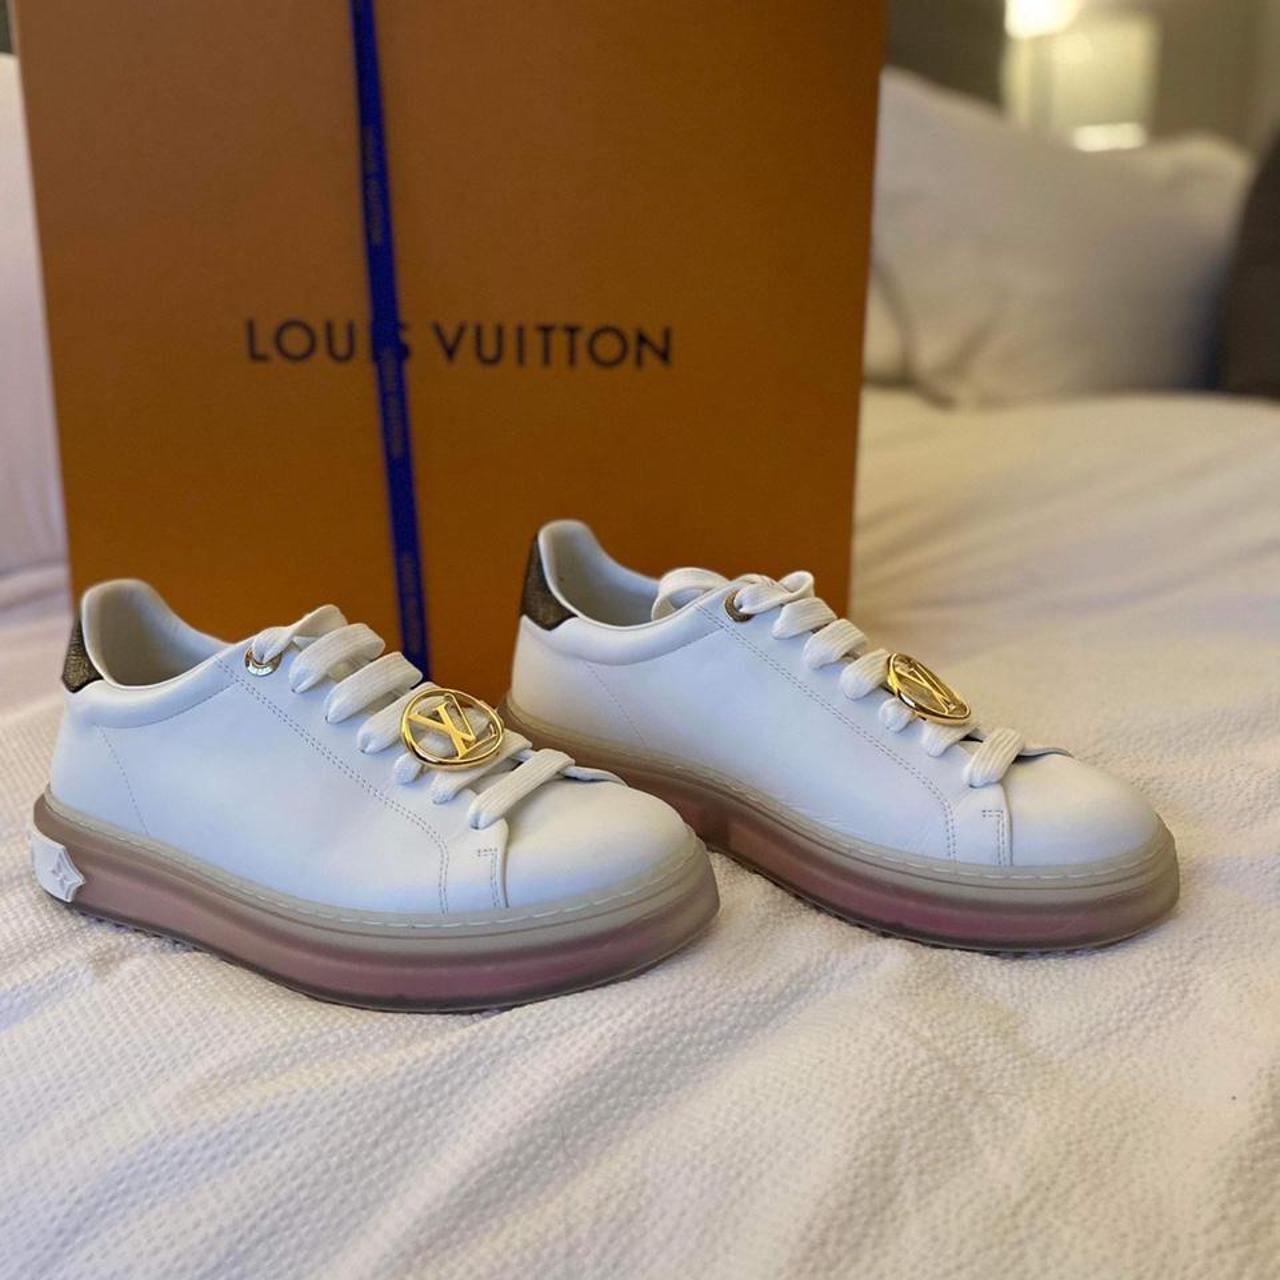 Louis Vuitton Skates - Depop